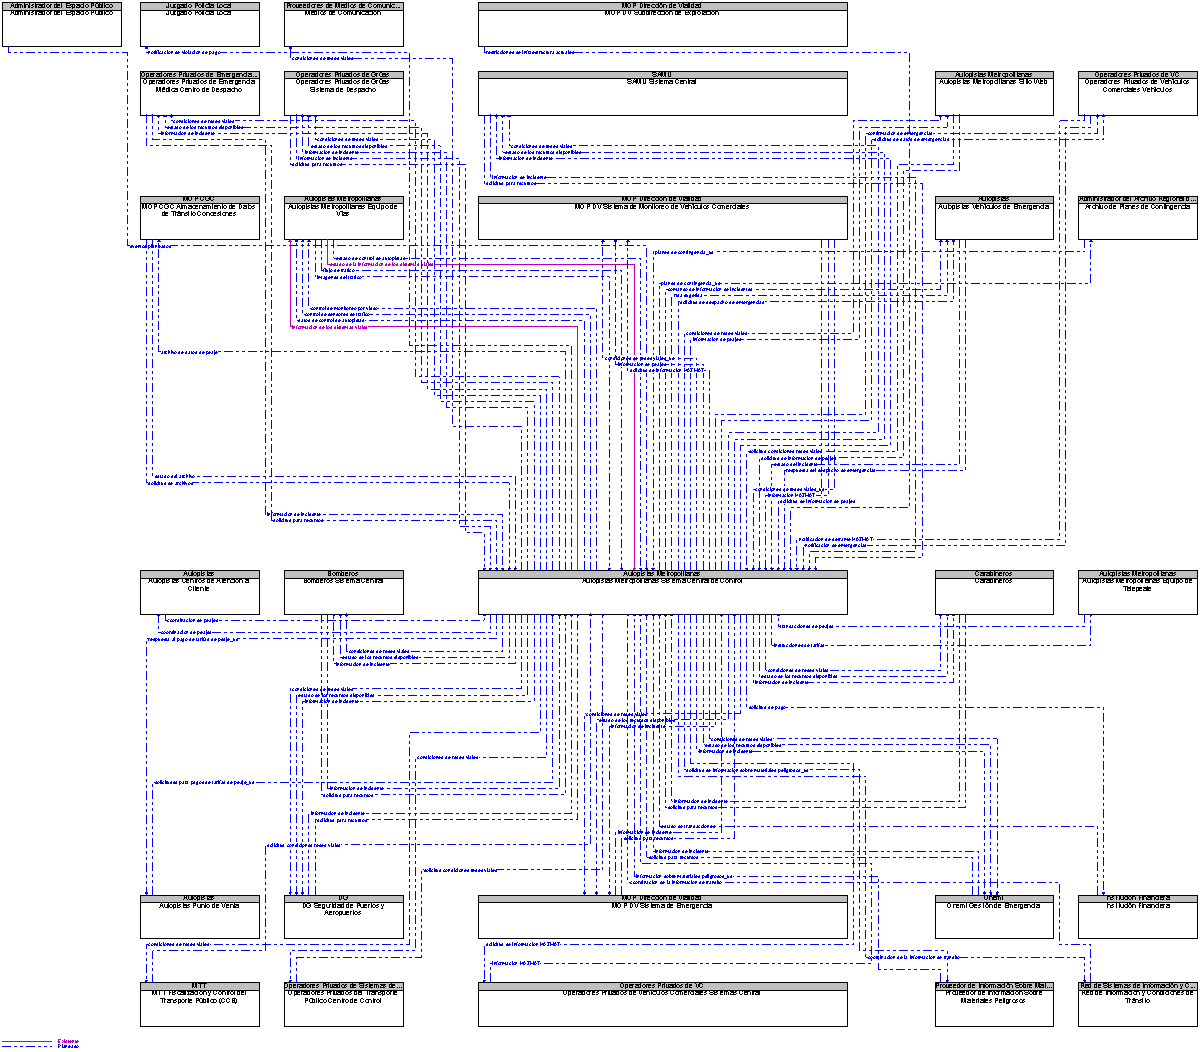 Diagrama Del Contexto por Autopistas Metropolitanas Sistema Central de Control